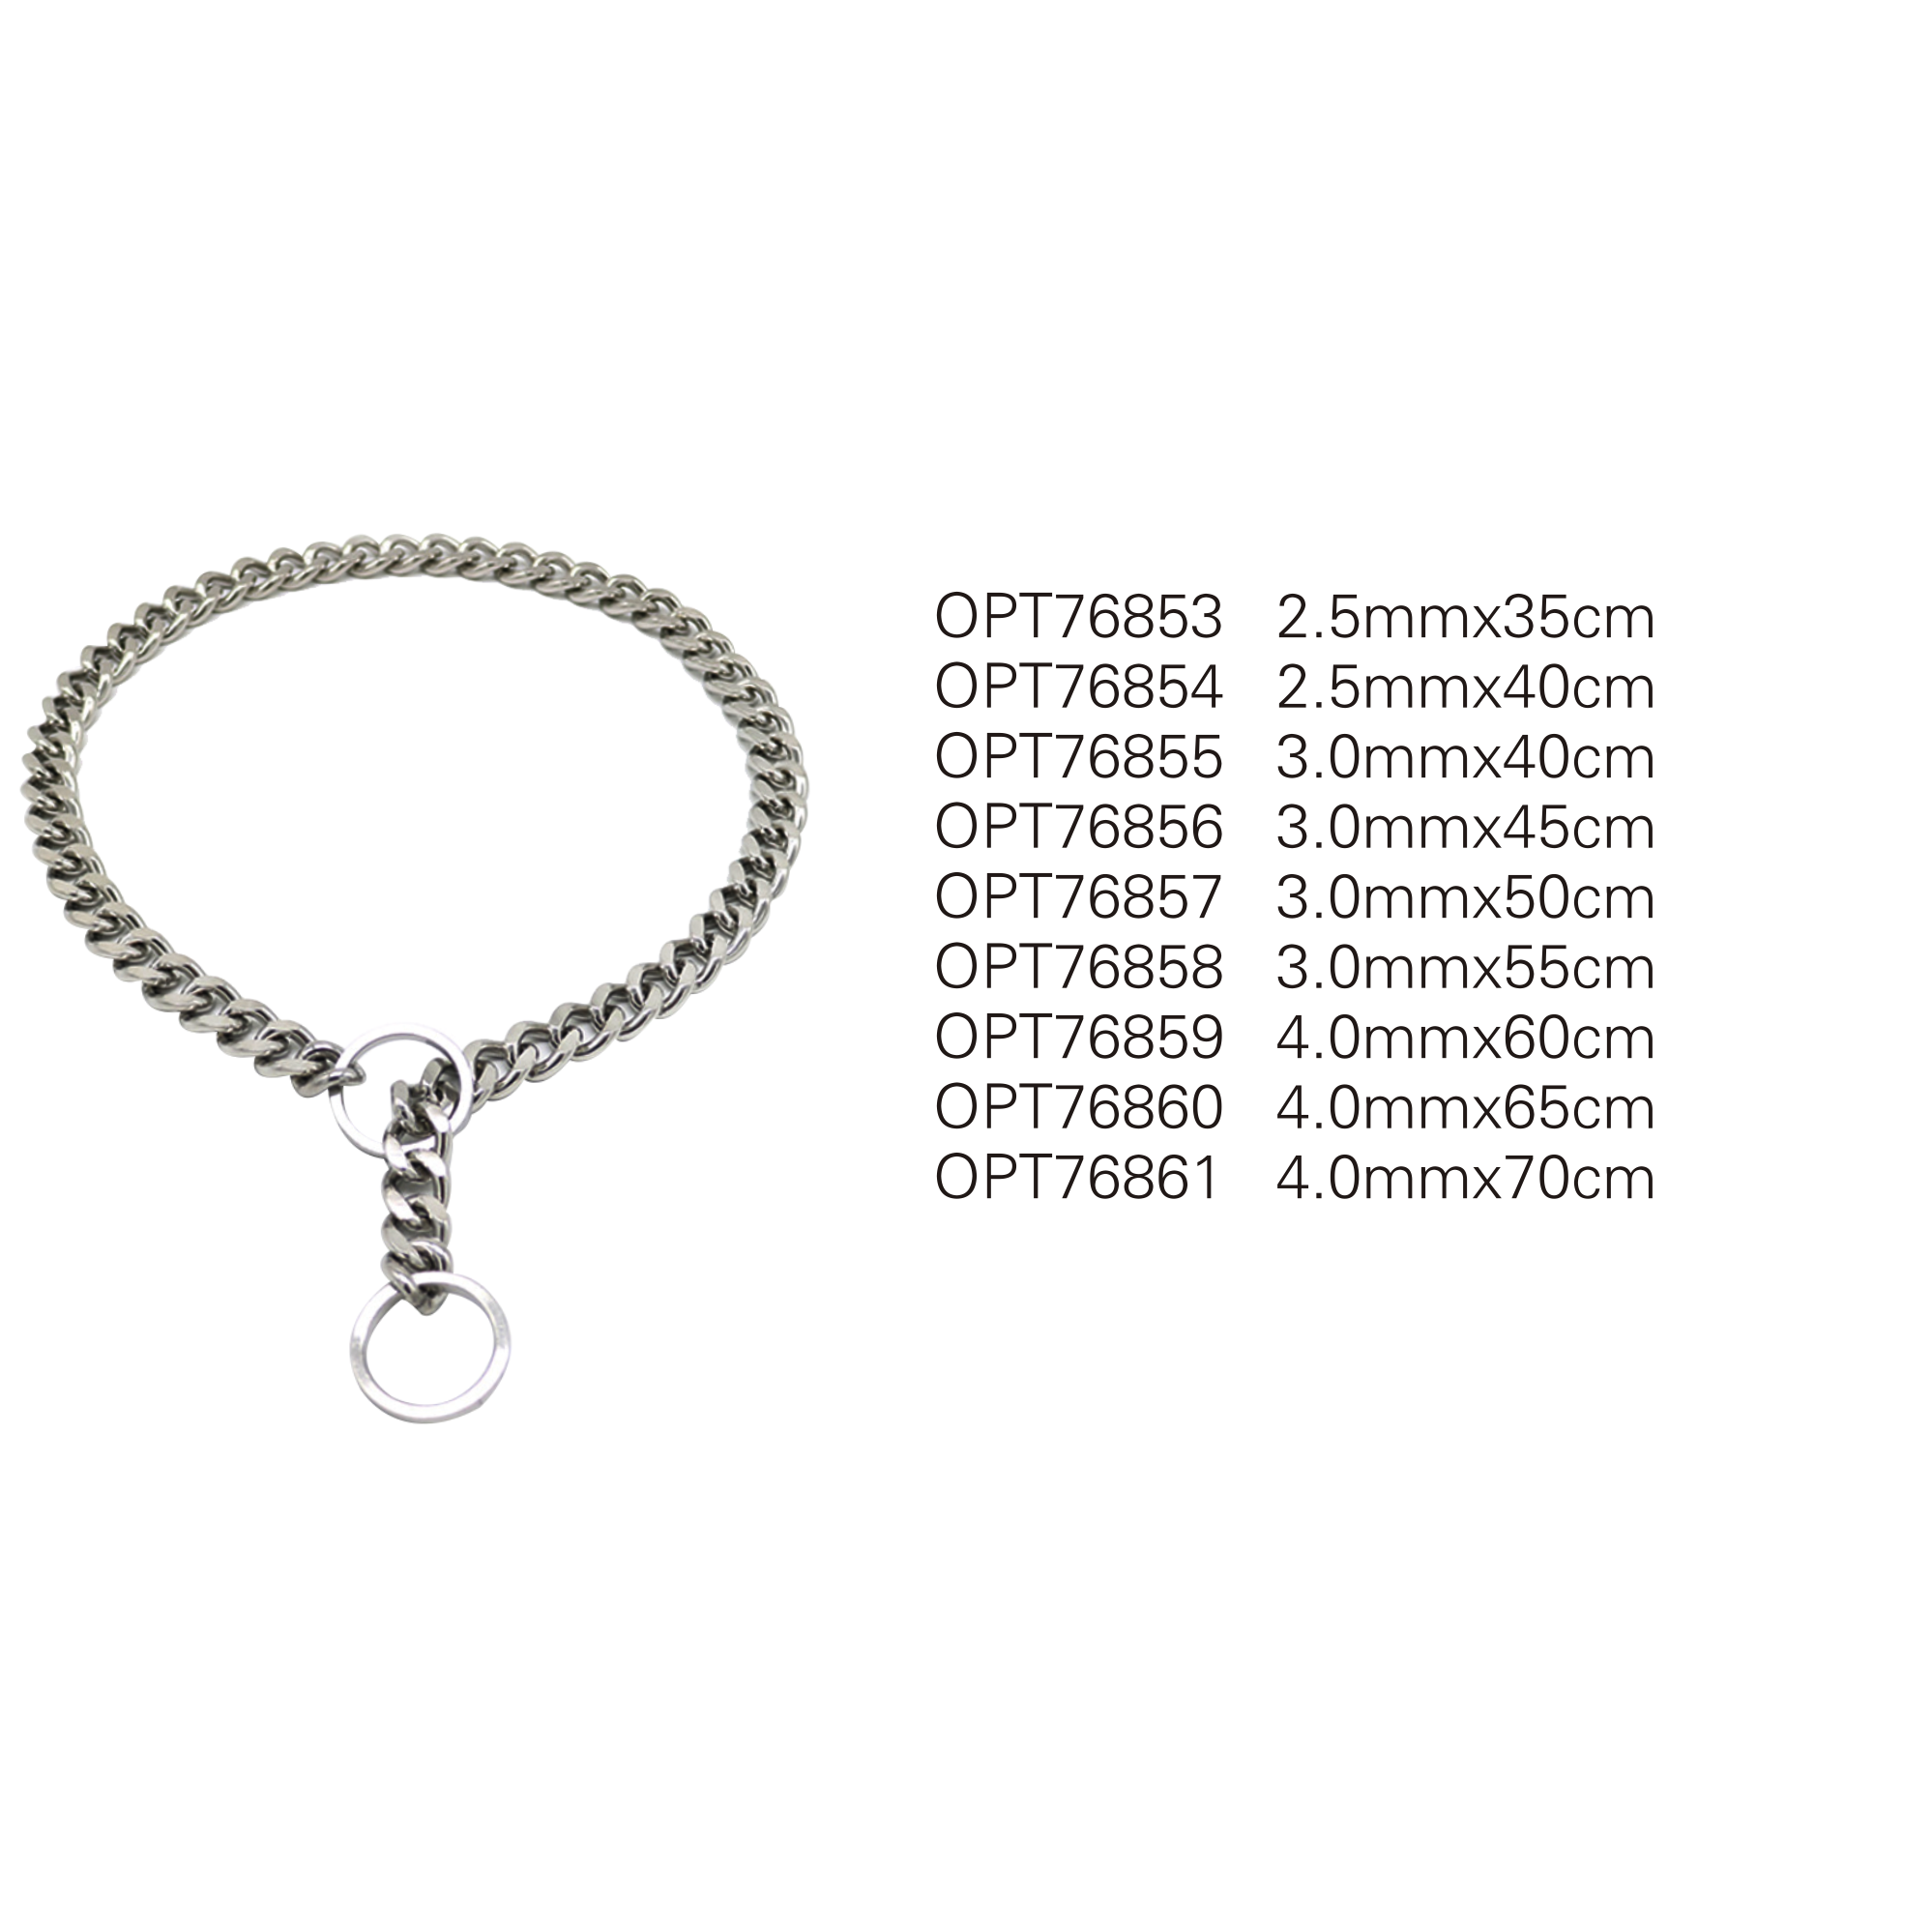 OPT76853-OPT76861 S.S.Choke chains